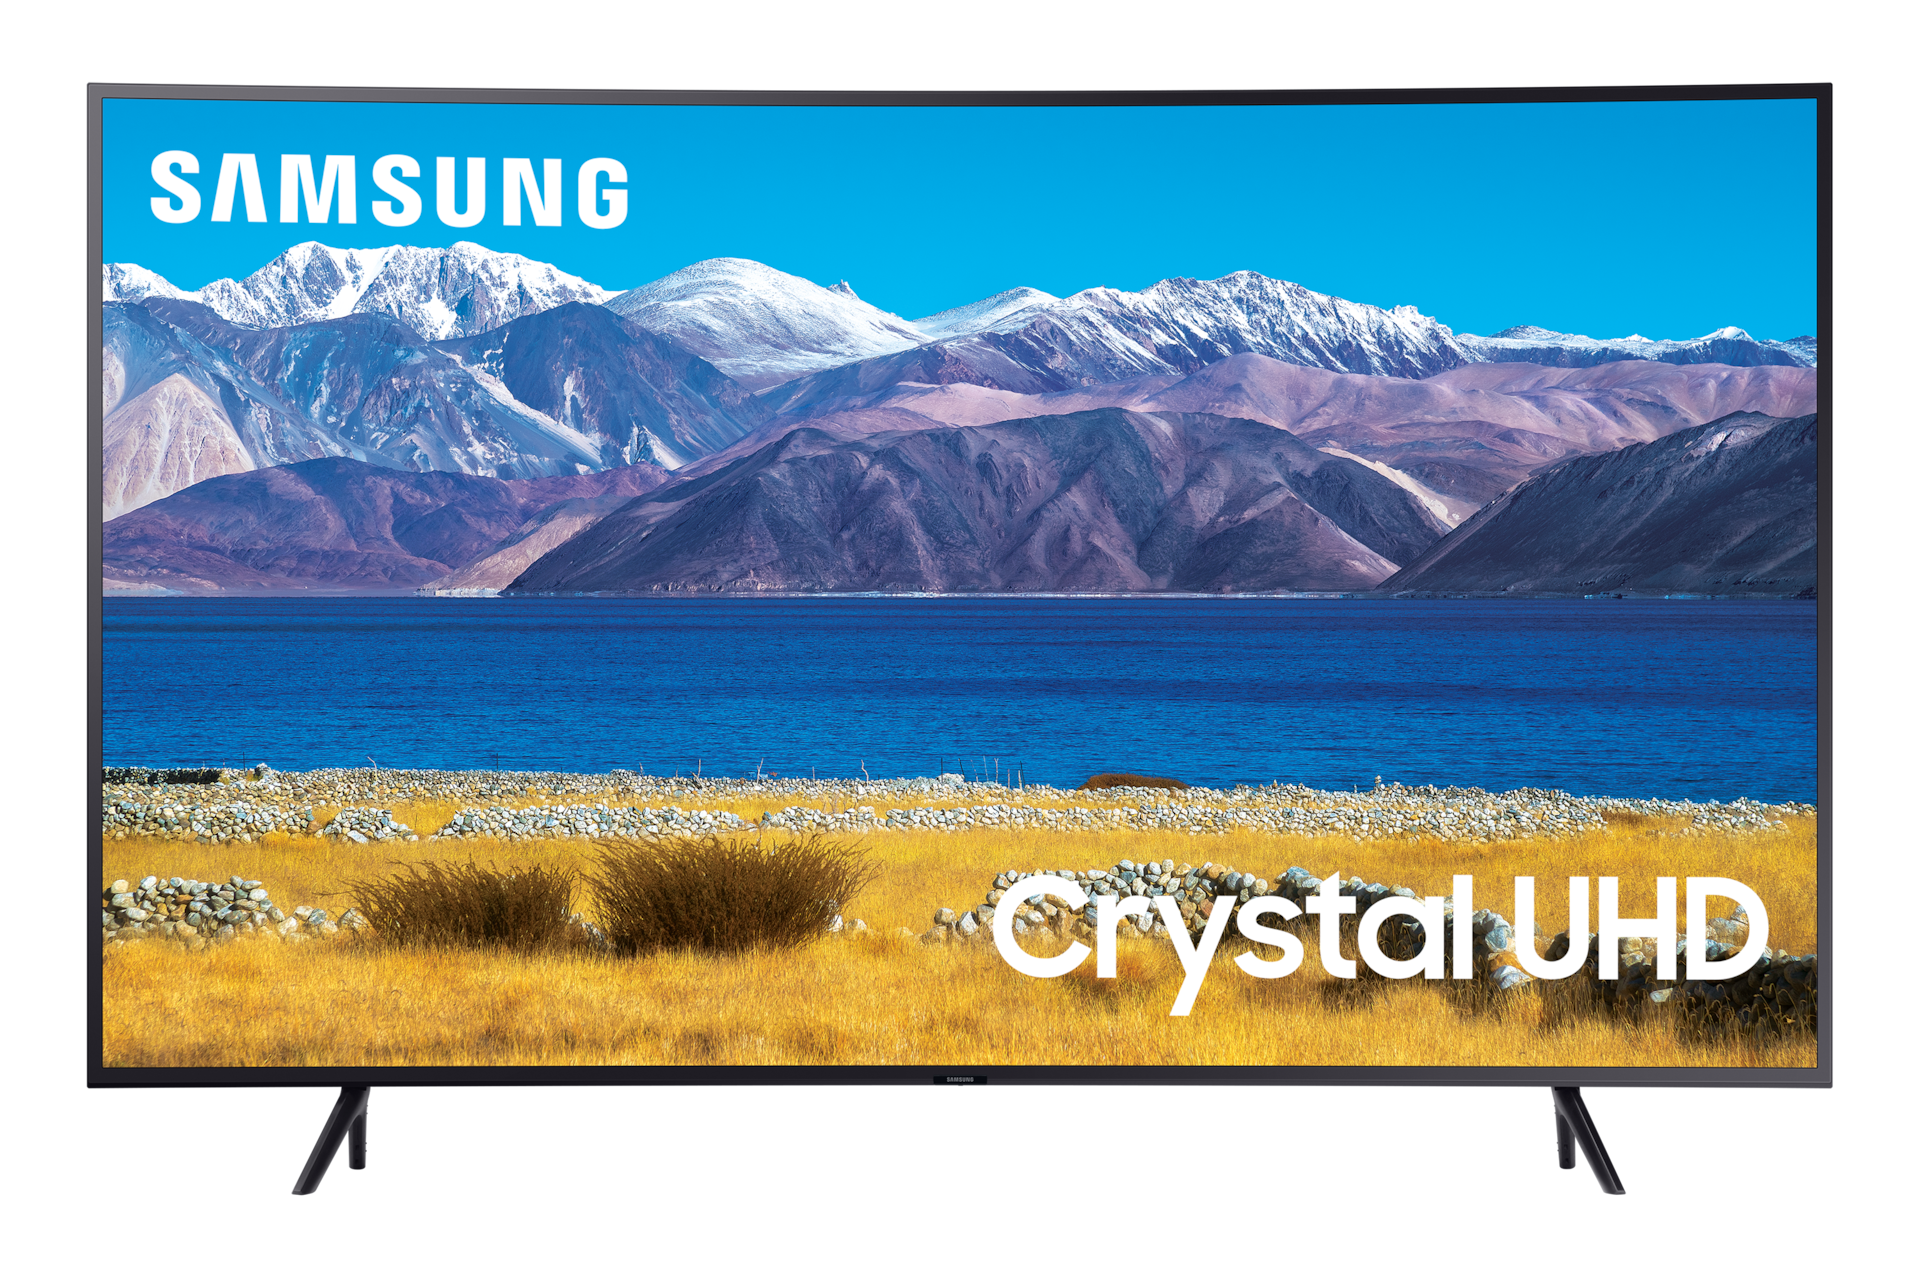 Geaccepteerd gids deur Curved Crystal UHD 55 inch TU8300 (2020) | UE65TU8300WXXN | Samsung NL